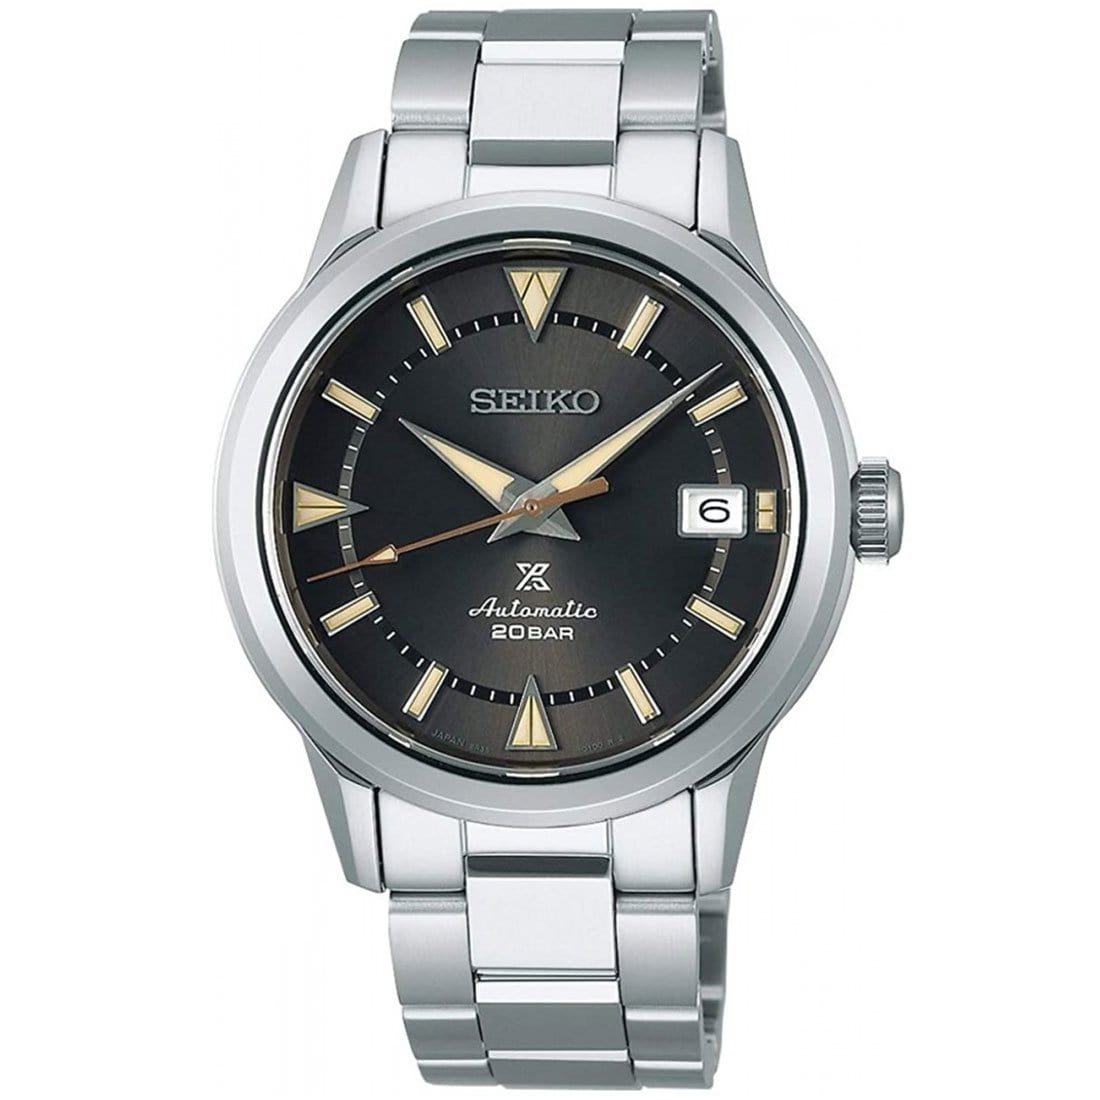 Seiko SBDC147 Prospex 1959 First Alpinist Contemporary Automatic Black Dial JDM Watch